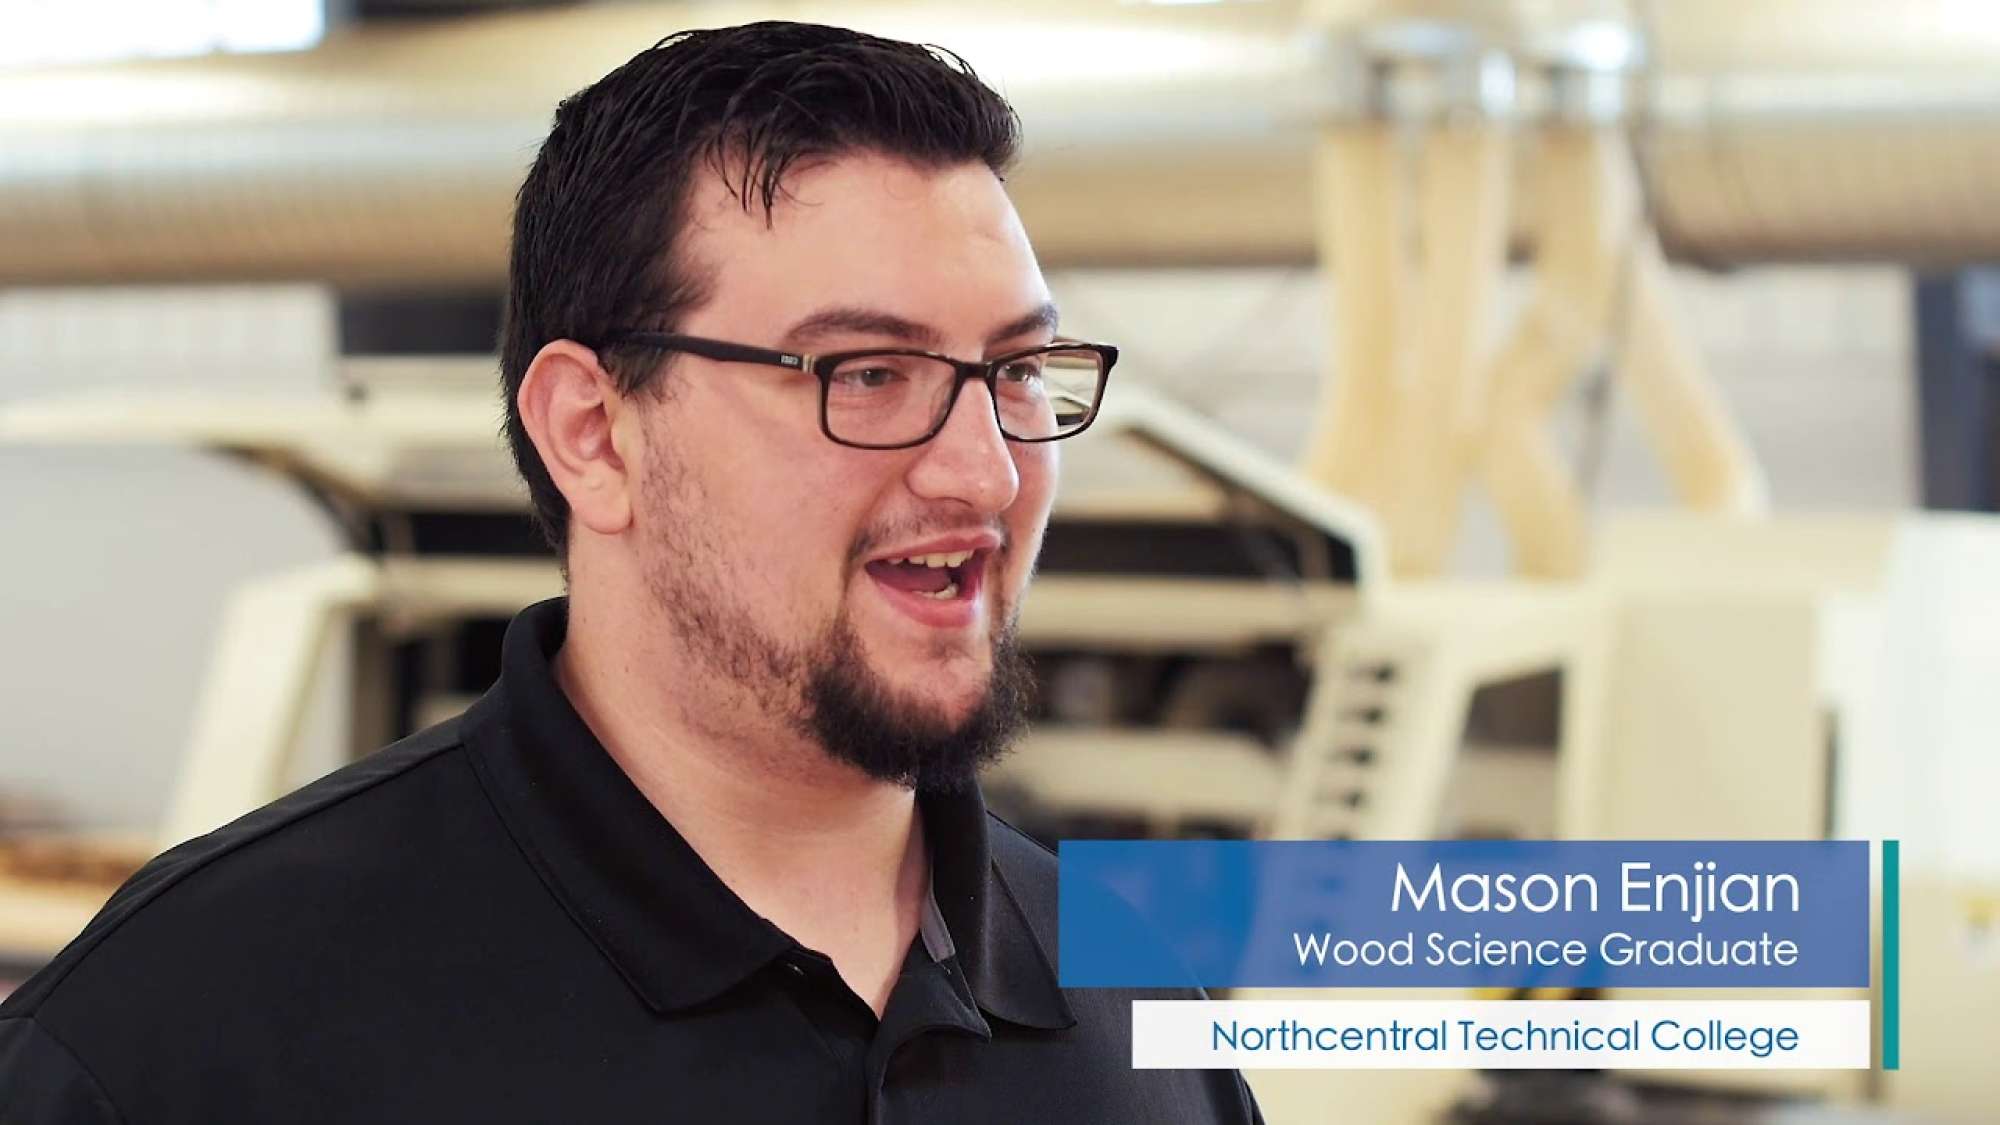 An interview with Mason Enjian, an NTC Wood Science graduate.